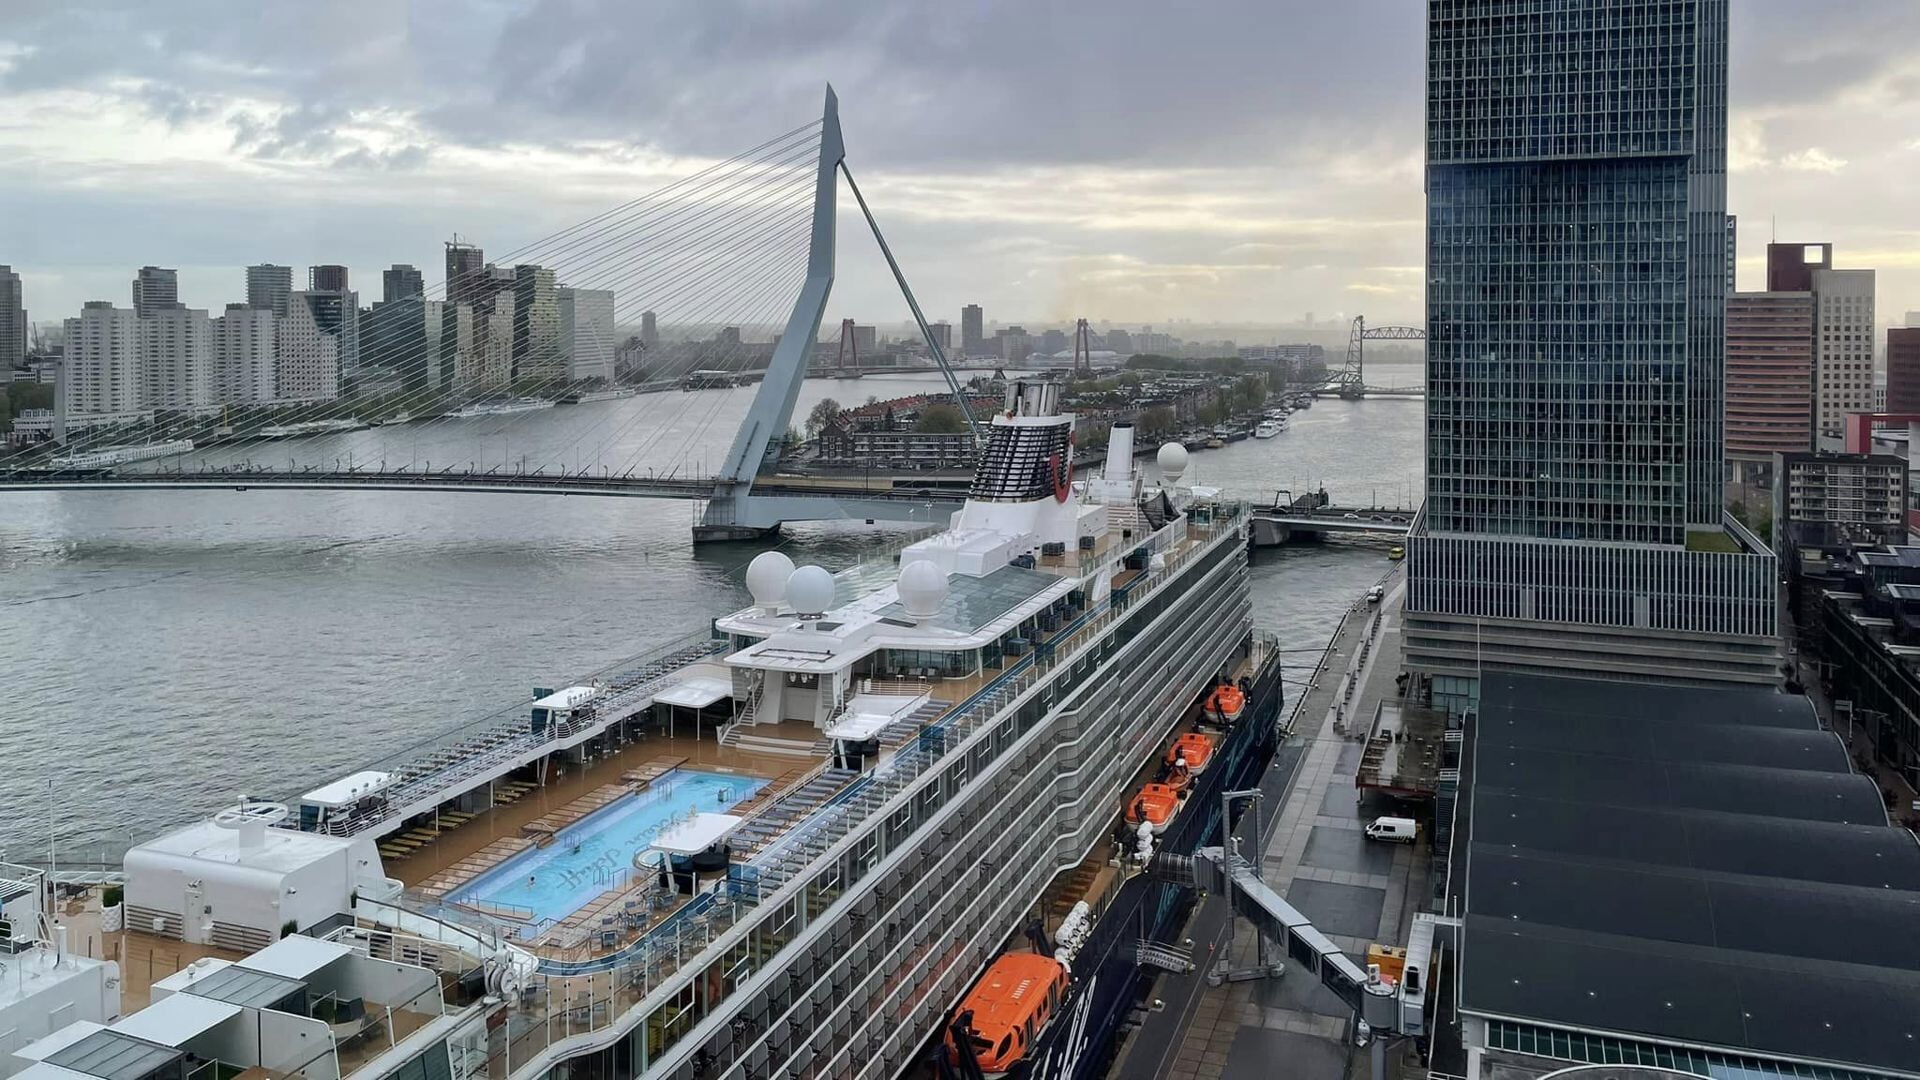 Cruiseschip Mein Schiff 3 aan de Rotterdamse kade. Foto: Maris Heemskerk